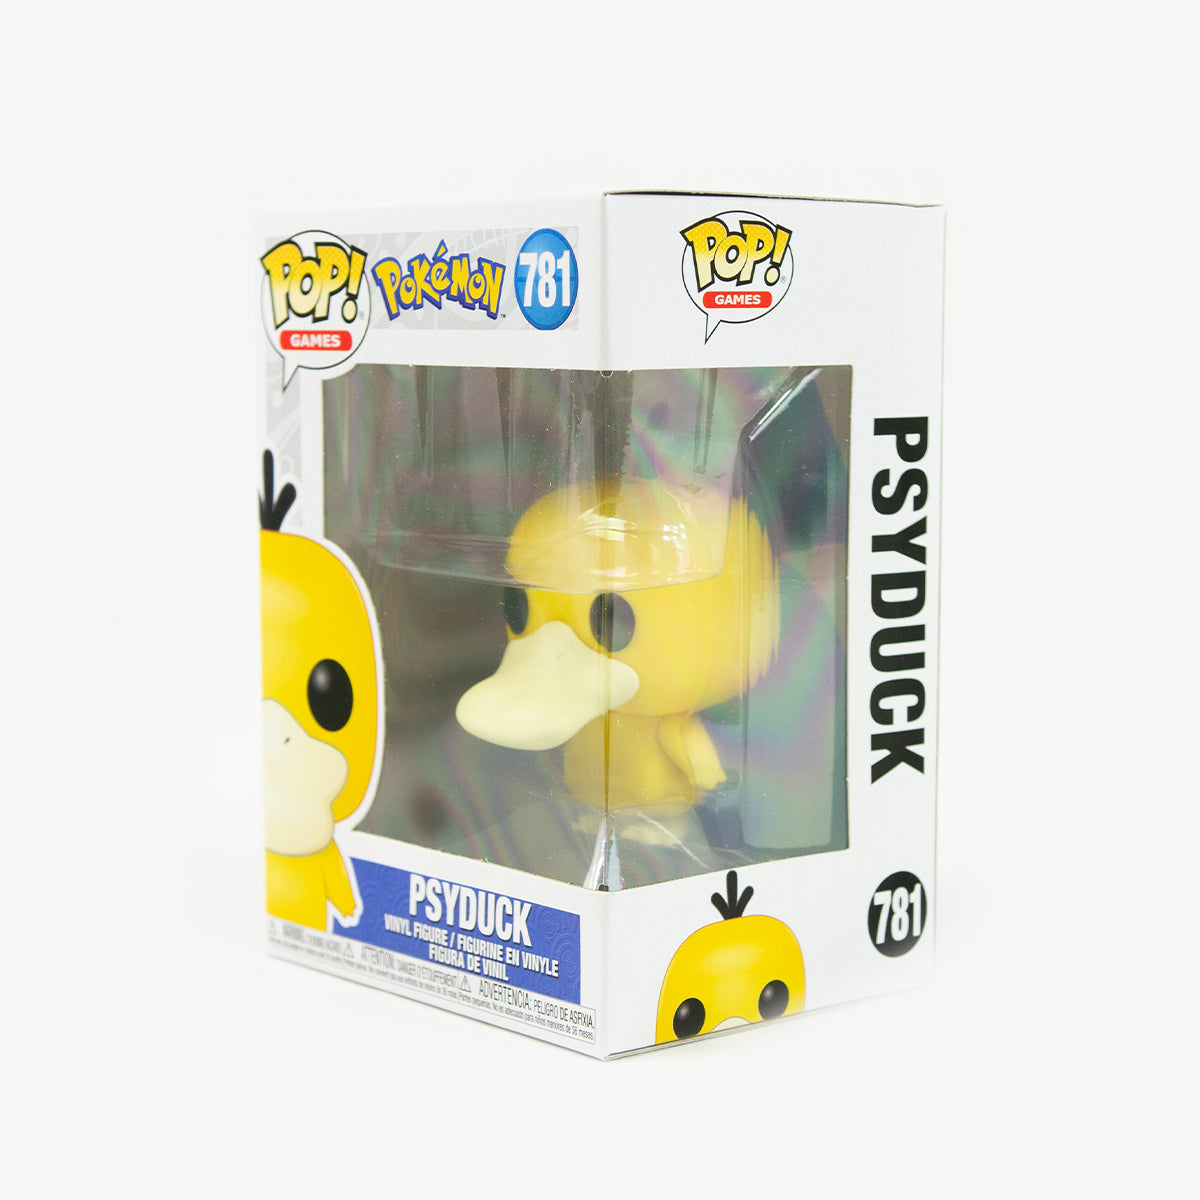 Funko Pop Pokémon Psycanard 781